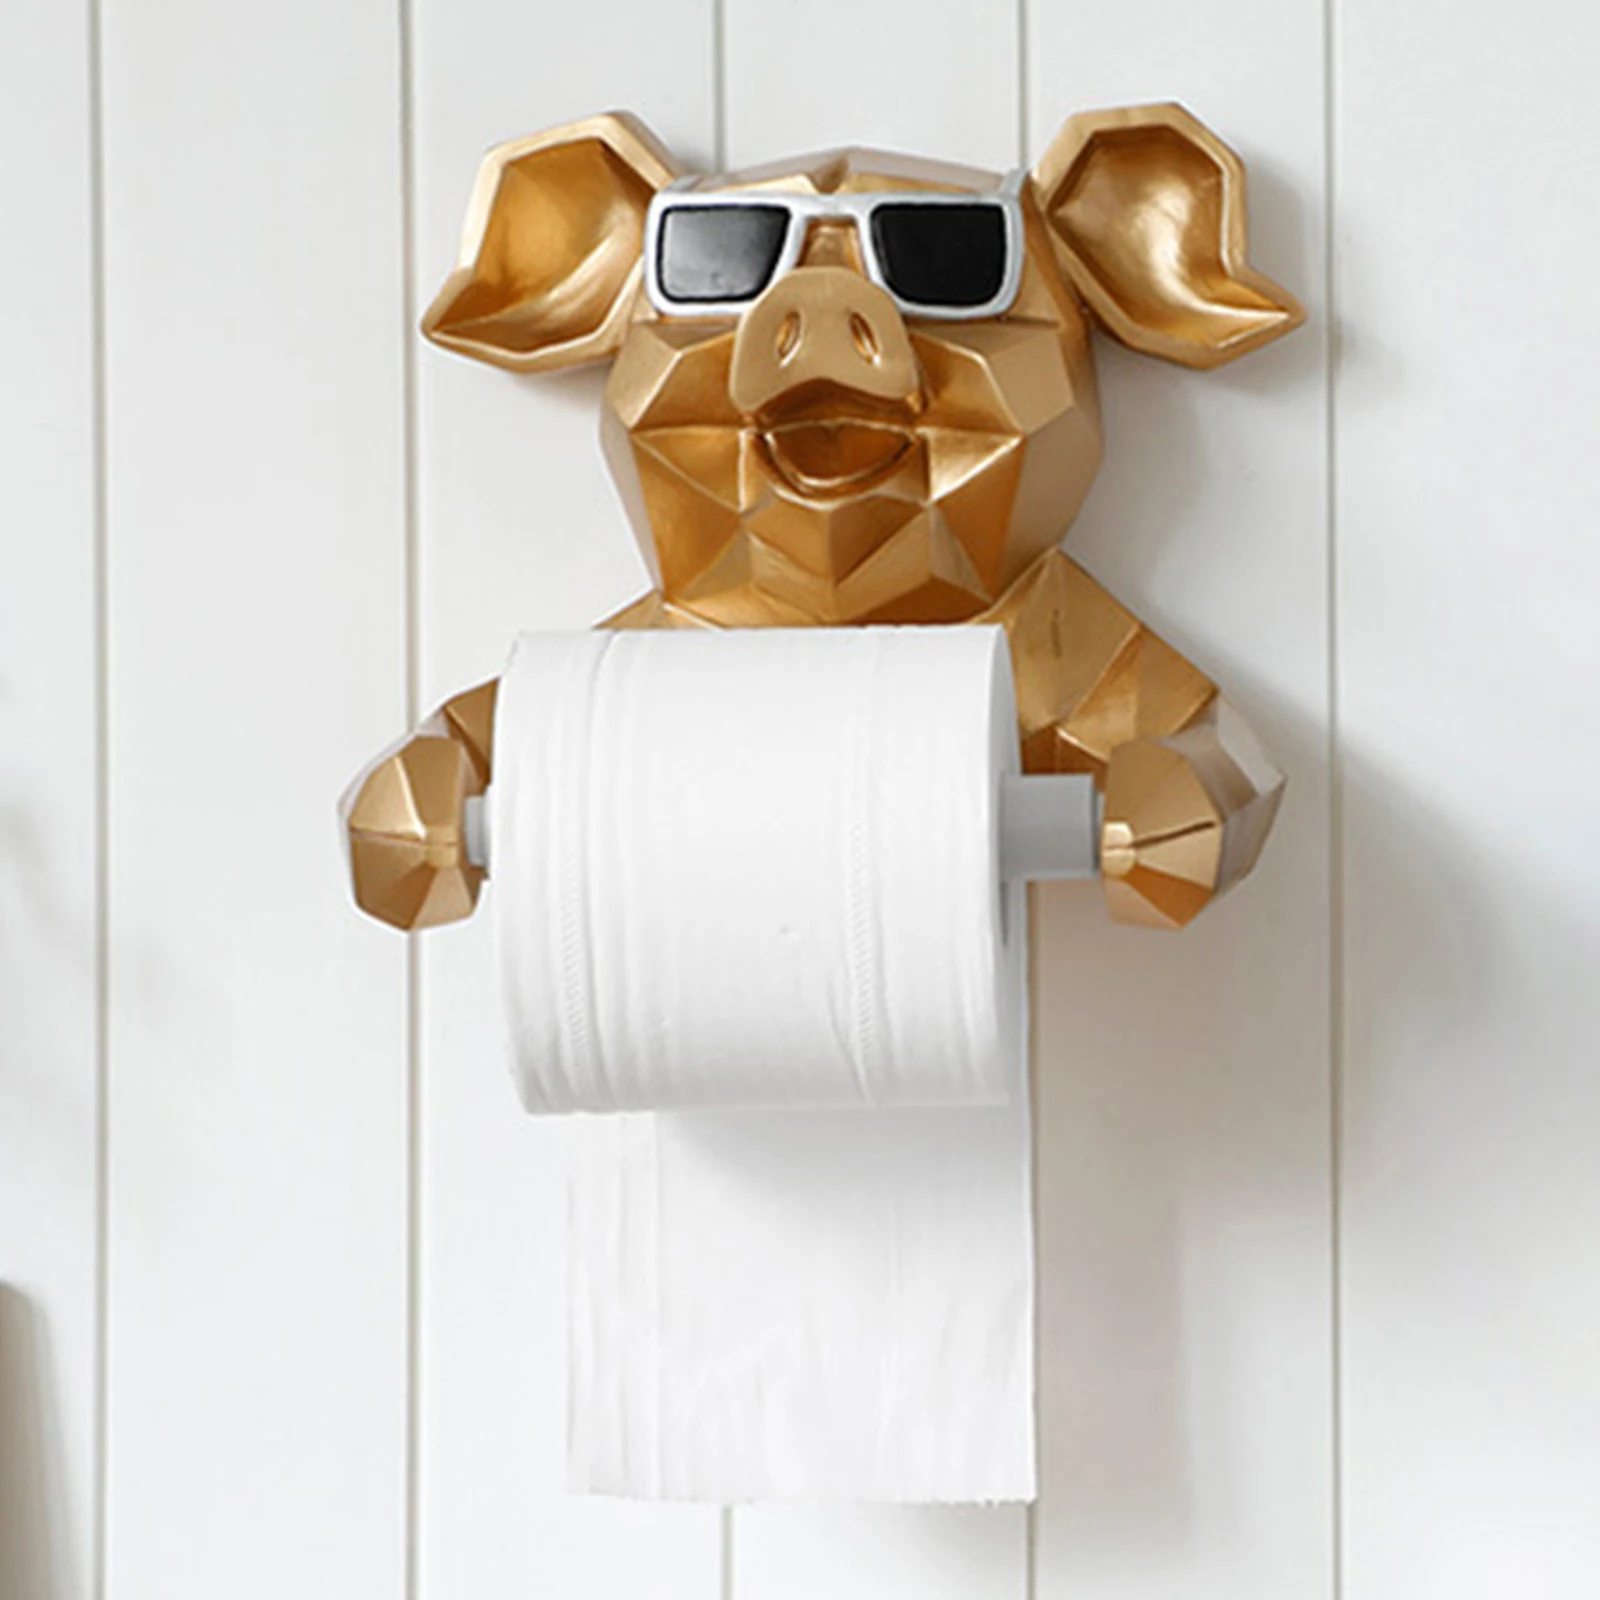 Nordic Wall Mount Toilet Paper Holder Tissue Stand Indoor Kitchen Art Decor Metal Bathroom Stand Accessories Storage